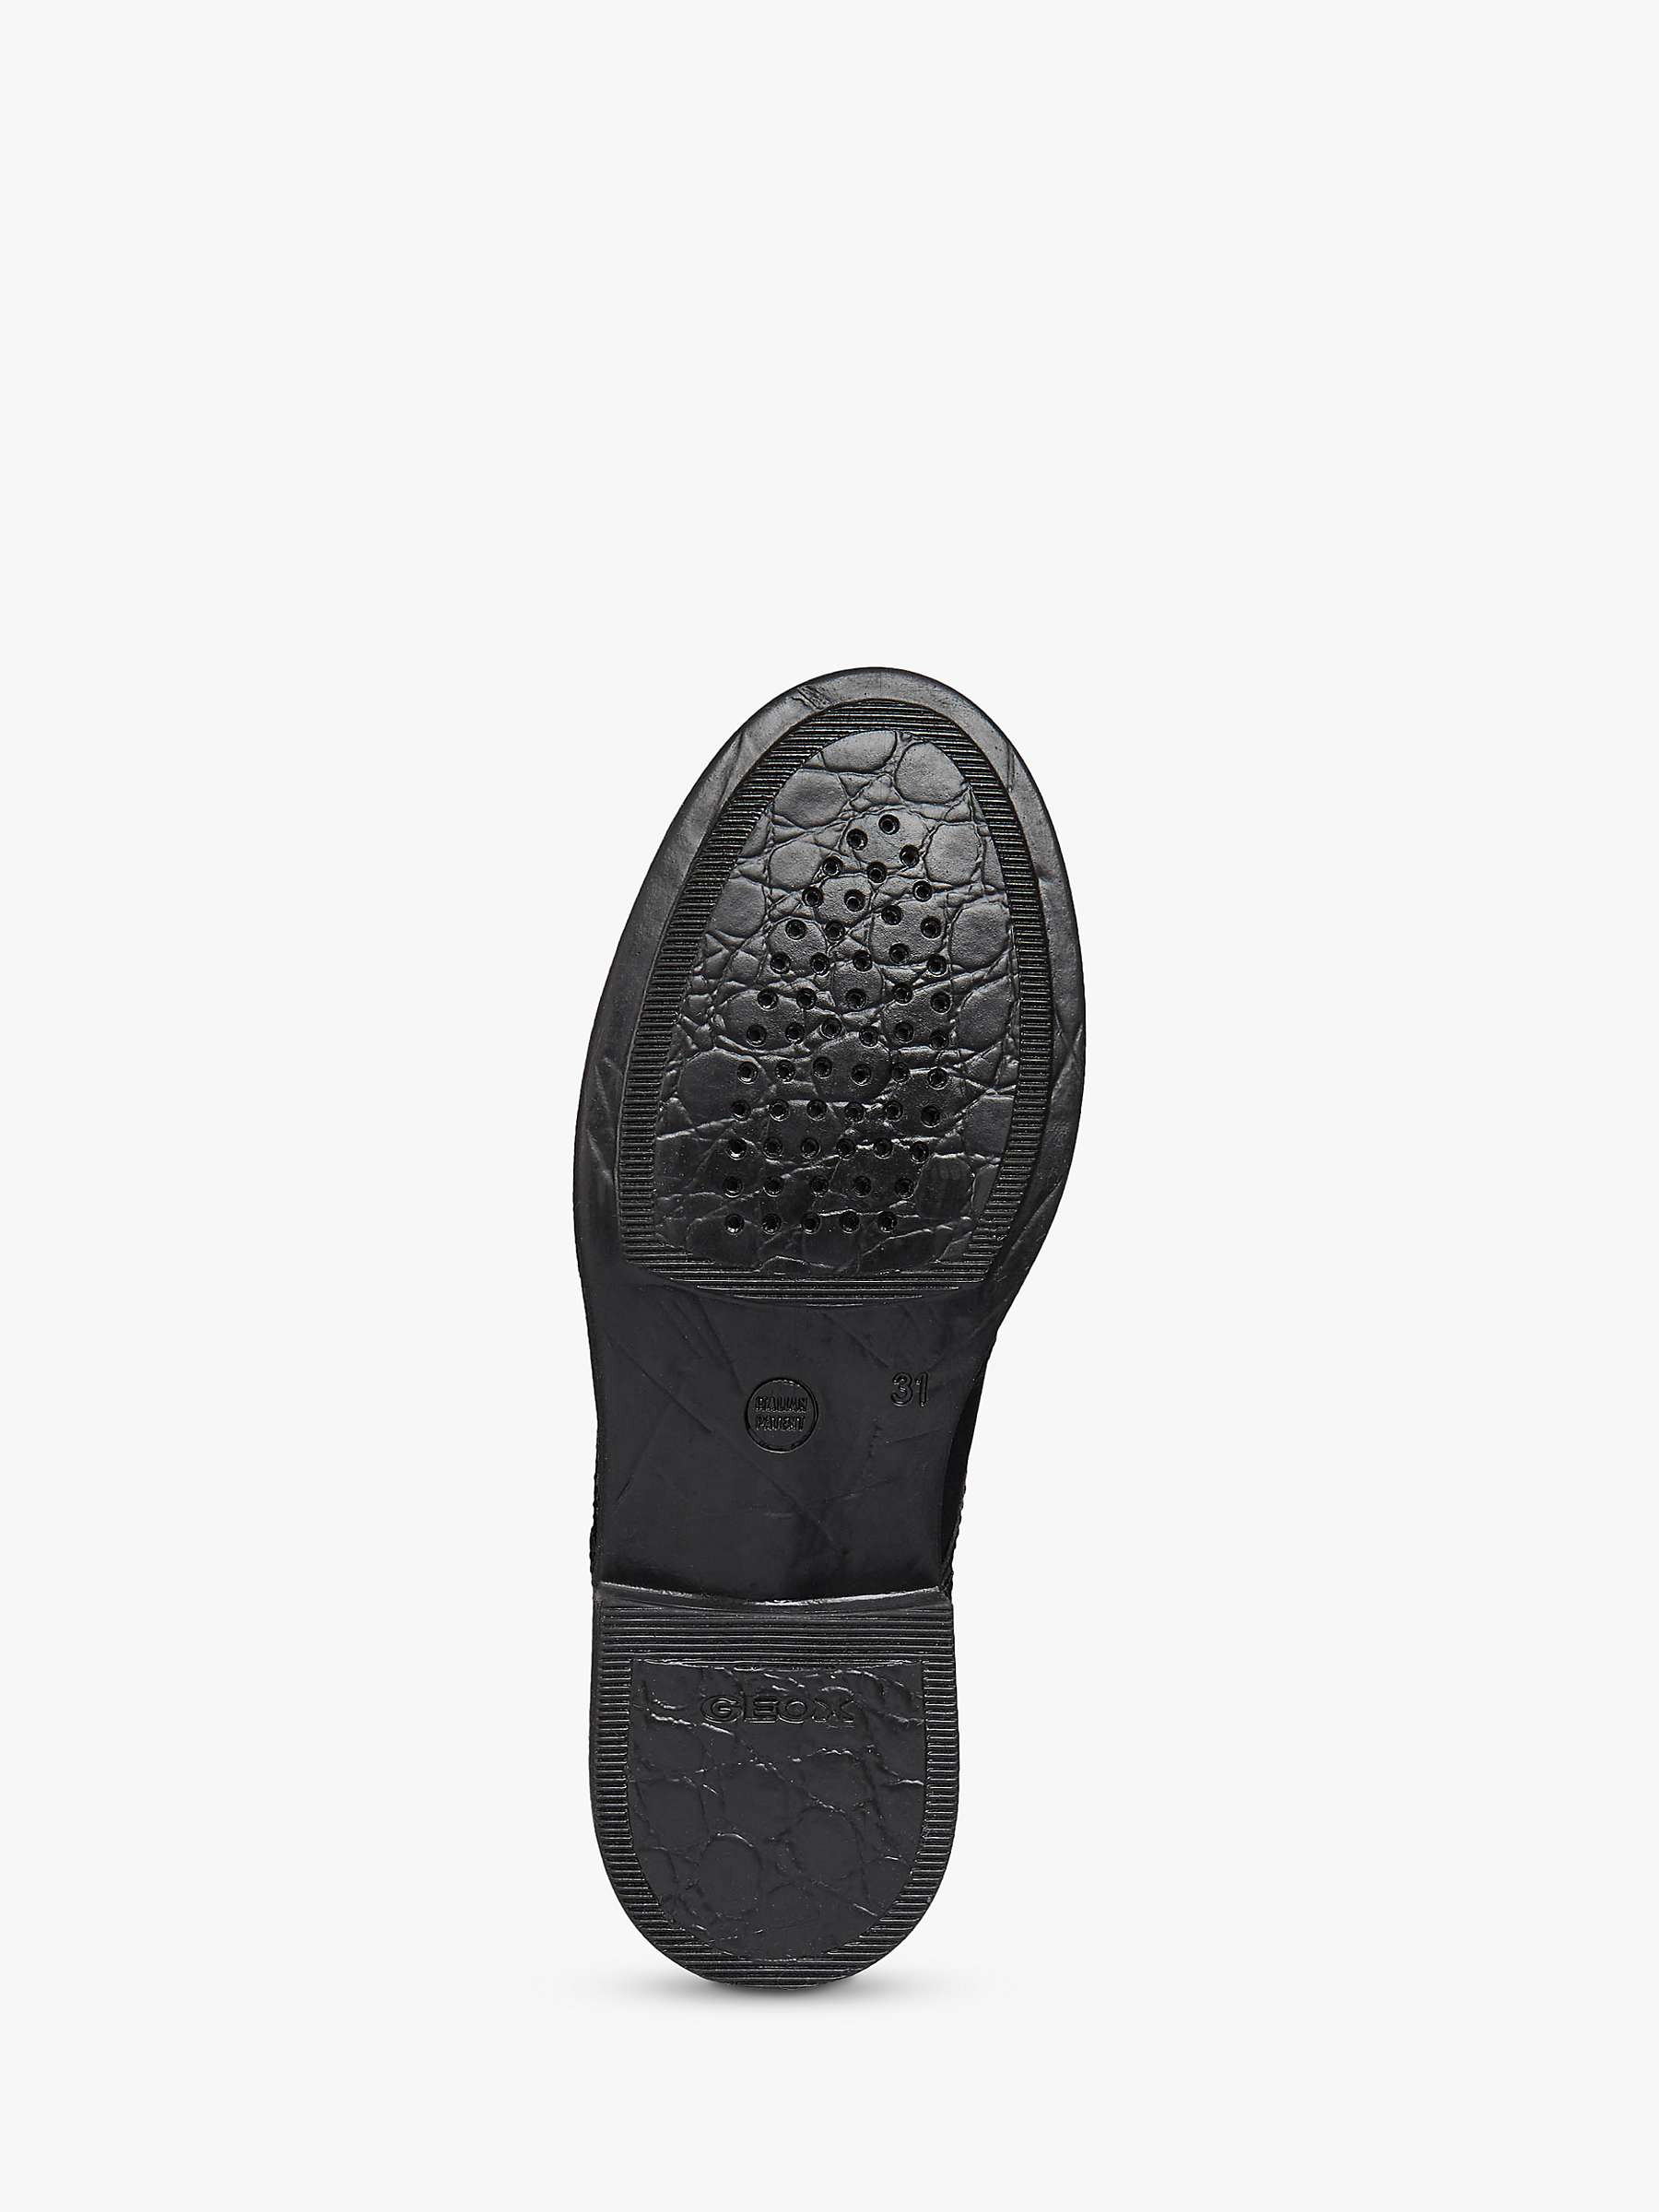 Buy Geox Kids' Agata Leather Brogue School Shoes, Black Online at johnlewis.com